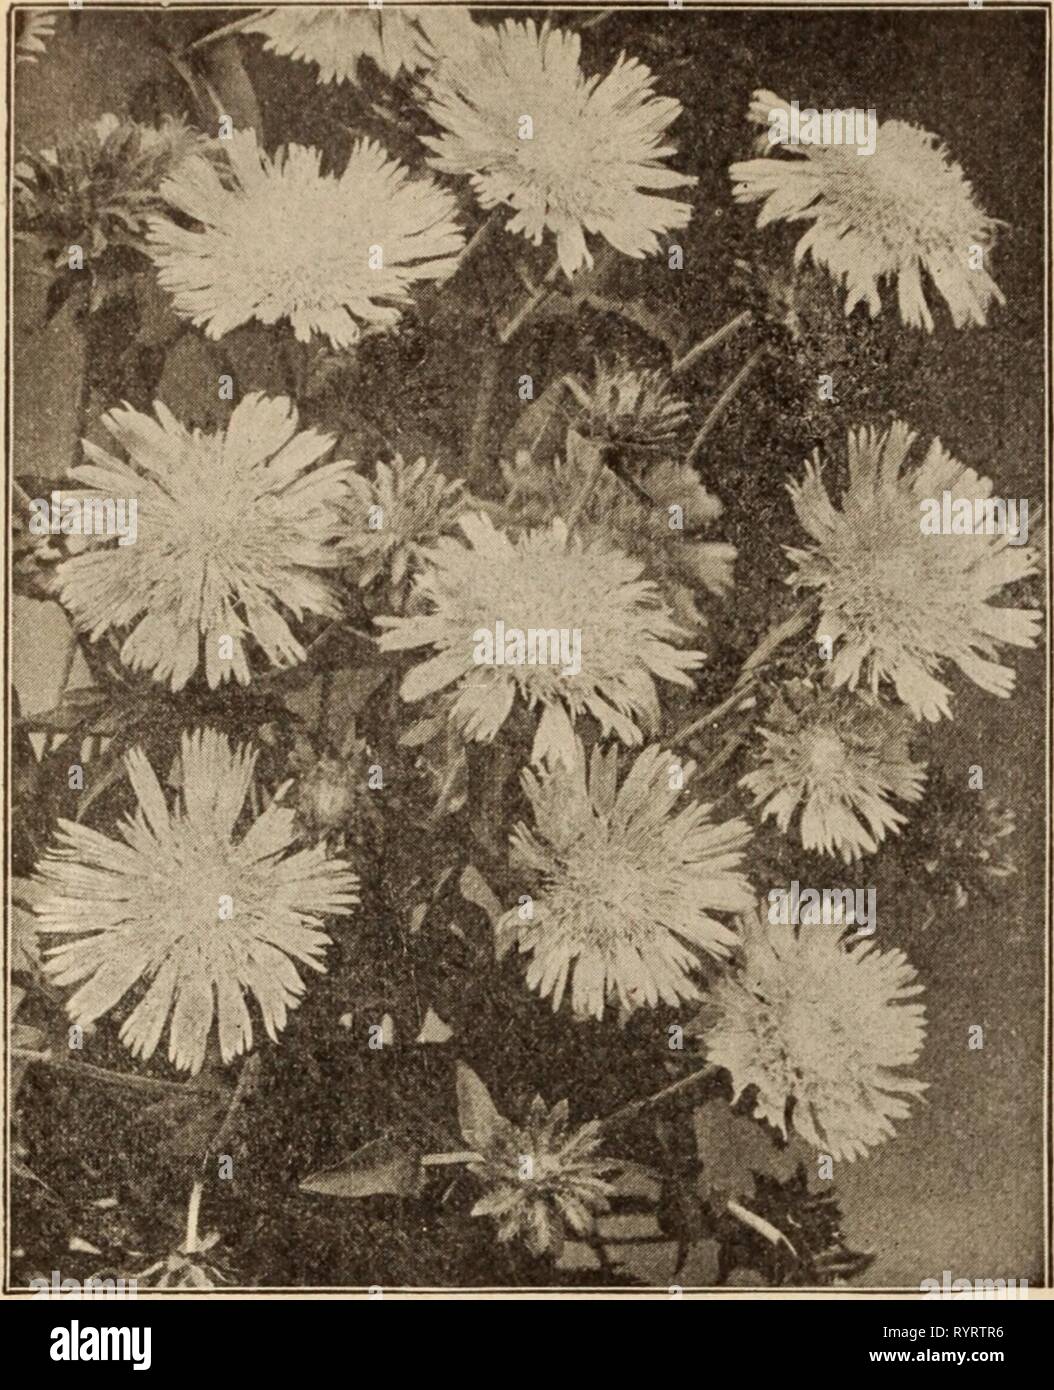 Dreer's wholesale price list  Dreer's wholesale price list / Henry A. Dreer. . dreerswholesalep1912dree Year:   52 HENRY A. DREER, PHILADELPHIA, PA., WHOLHSALE PRICE LIST    STOKESIA CYANEA (Comflower Aster) Scutellaria (Skull Cap). Per doz. Per 100 Caelestina. 3-inch pots $1 00 $7 00 Sedum (Stonecrop). Acre. 4-inch pots 85 6 GO Album. Divisions. 4-inch pots 85 6 00 Japonica Macrophylla. 4-inch pots 1 00 7 00 Lydium Glaucum. 3-inch pots 1 00 7 00 Sexangulare. 4-inch pots 85 6 00 Spectabilis Atropurpureum. Showy heads of hand- some deep rosy-crimson flowers . 1 00 7 00 Spectabilis Brilliant (ne Stock Photo